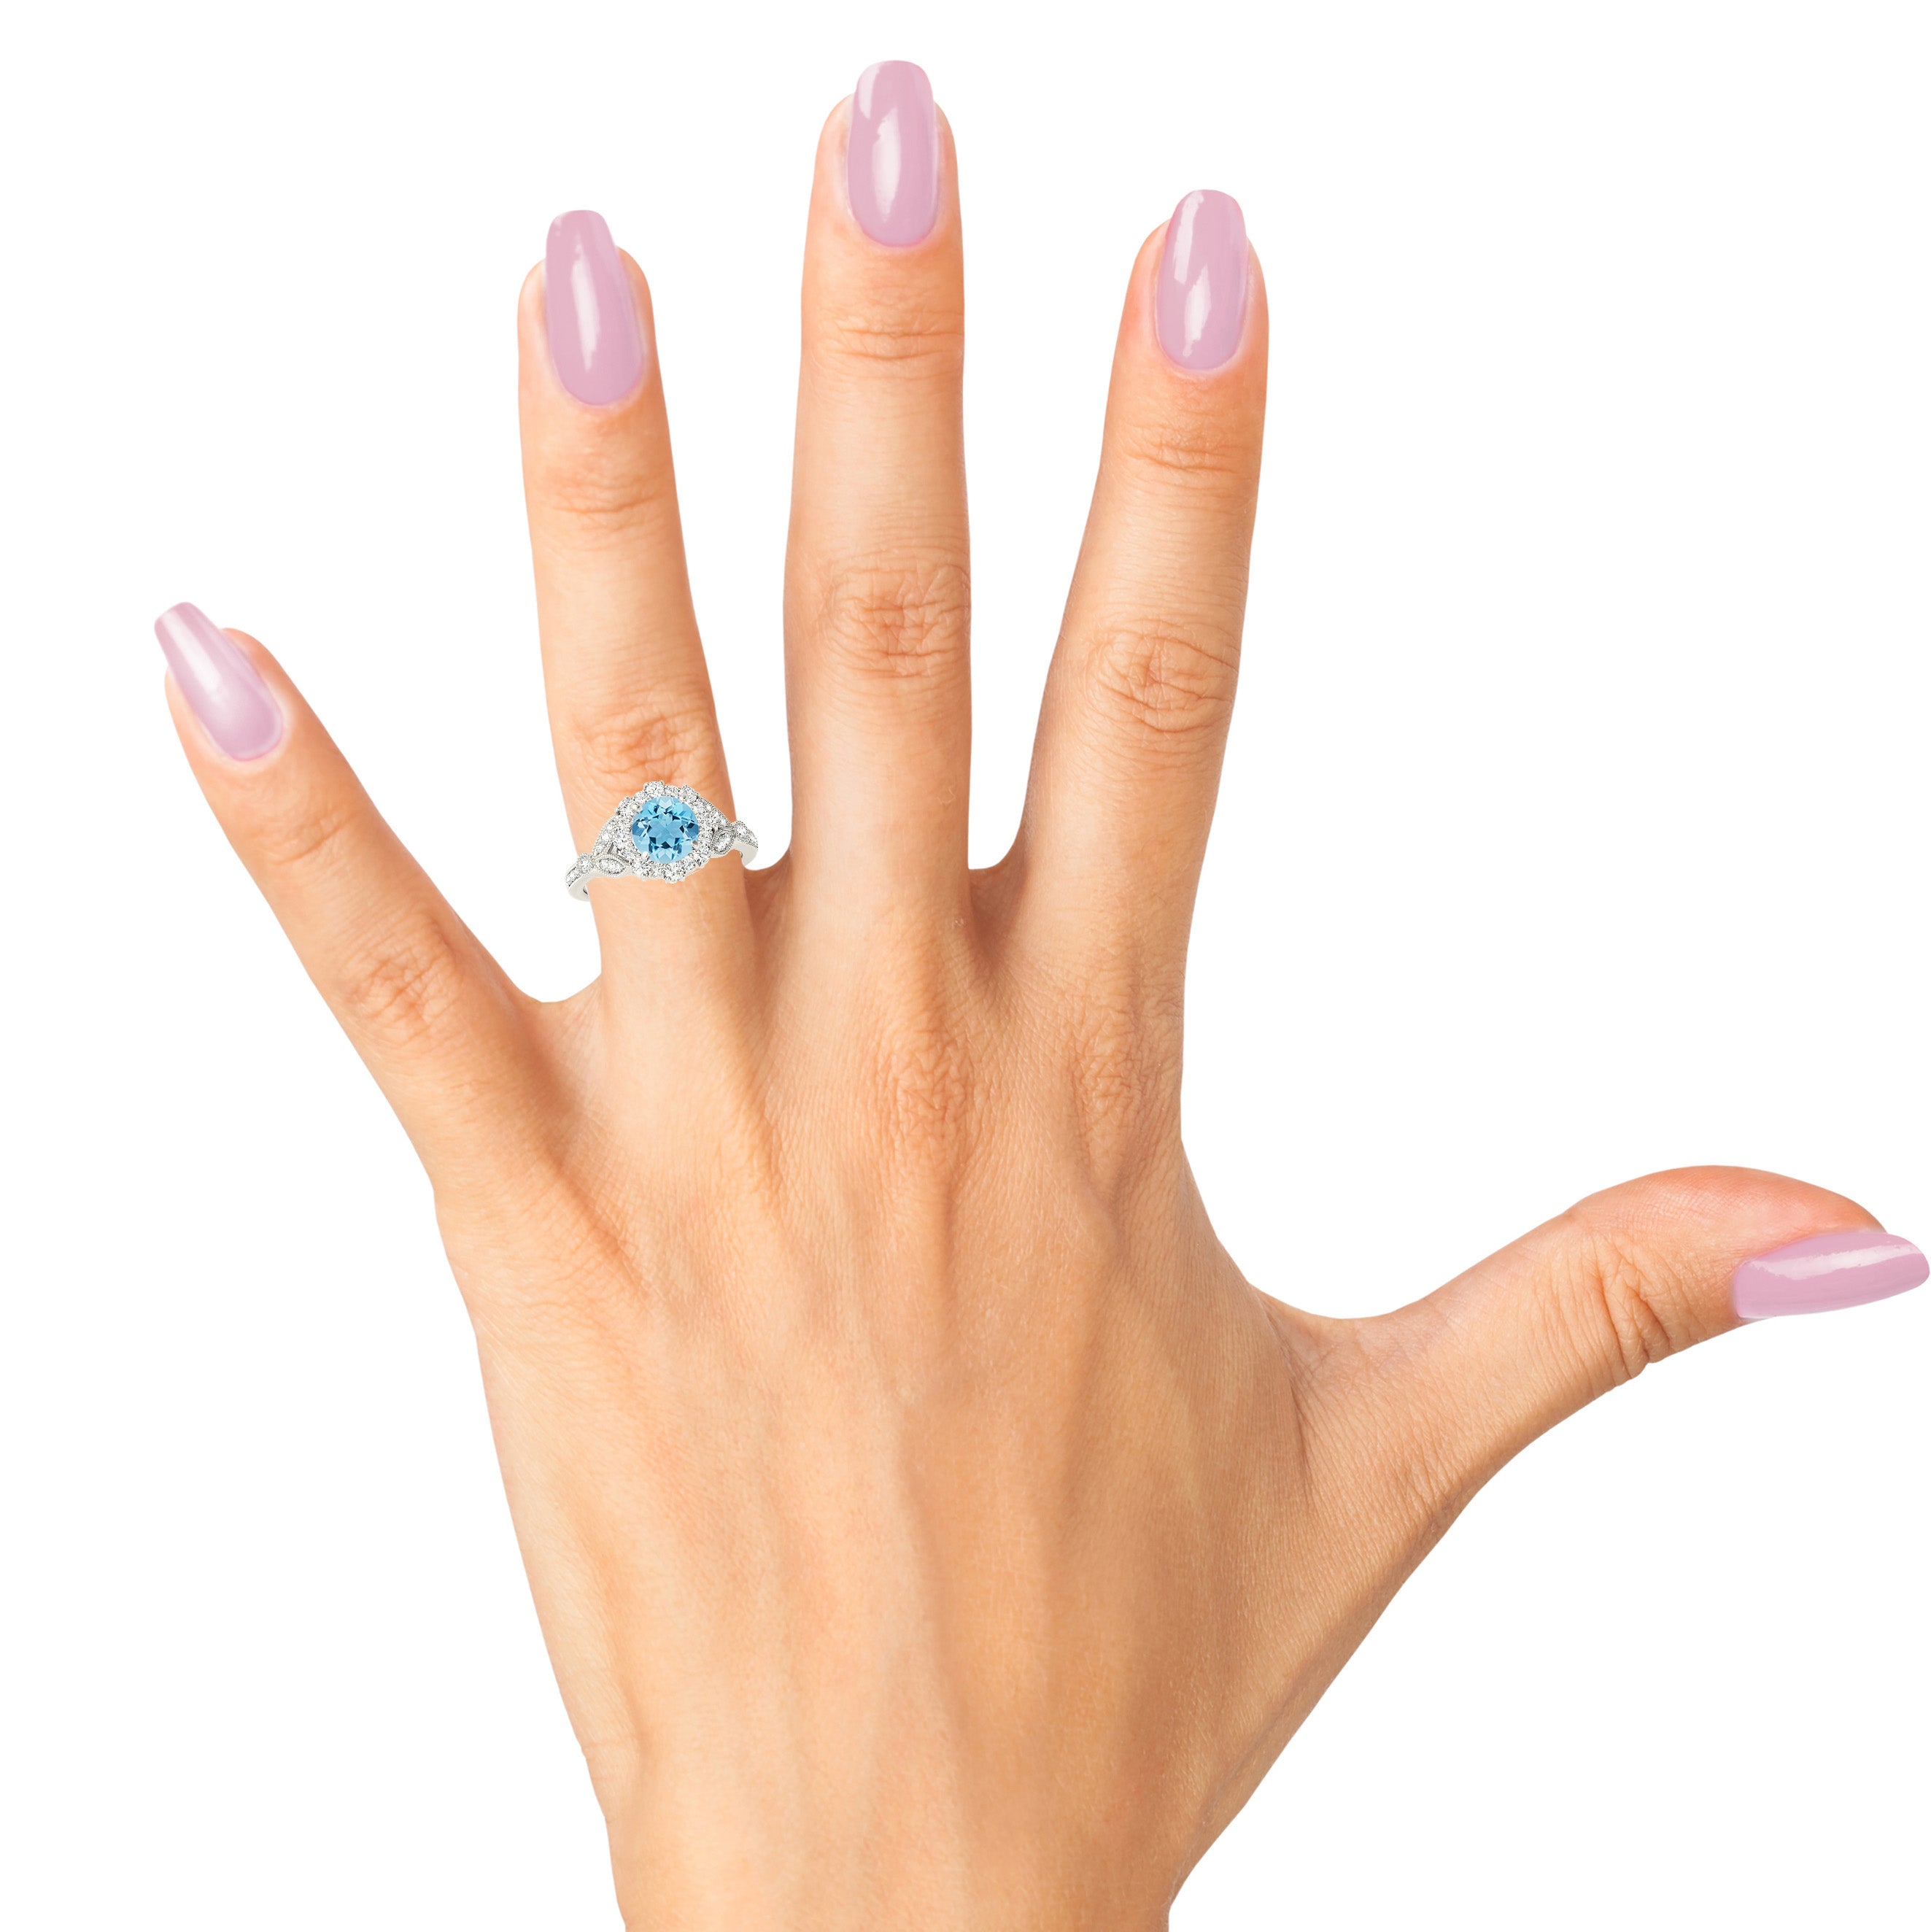 1.10 ct. Genuine Aquamarine Ring With 0.40 ctw. Diamond Flower Halo, Milgrain V Shape Graduating Diamond Band | Blue Aquamarine Halo Ring-in 14K/18K White, Yellow, Rose Gold and Platinum - Christmas Jewelry Gift -VIRABYANI